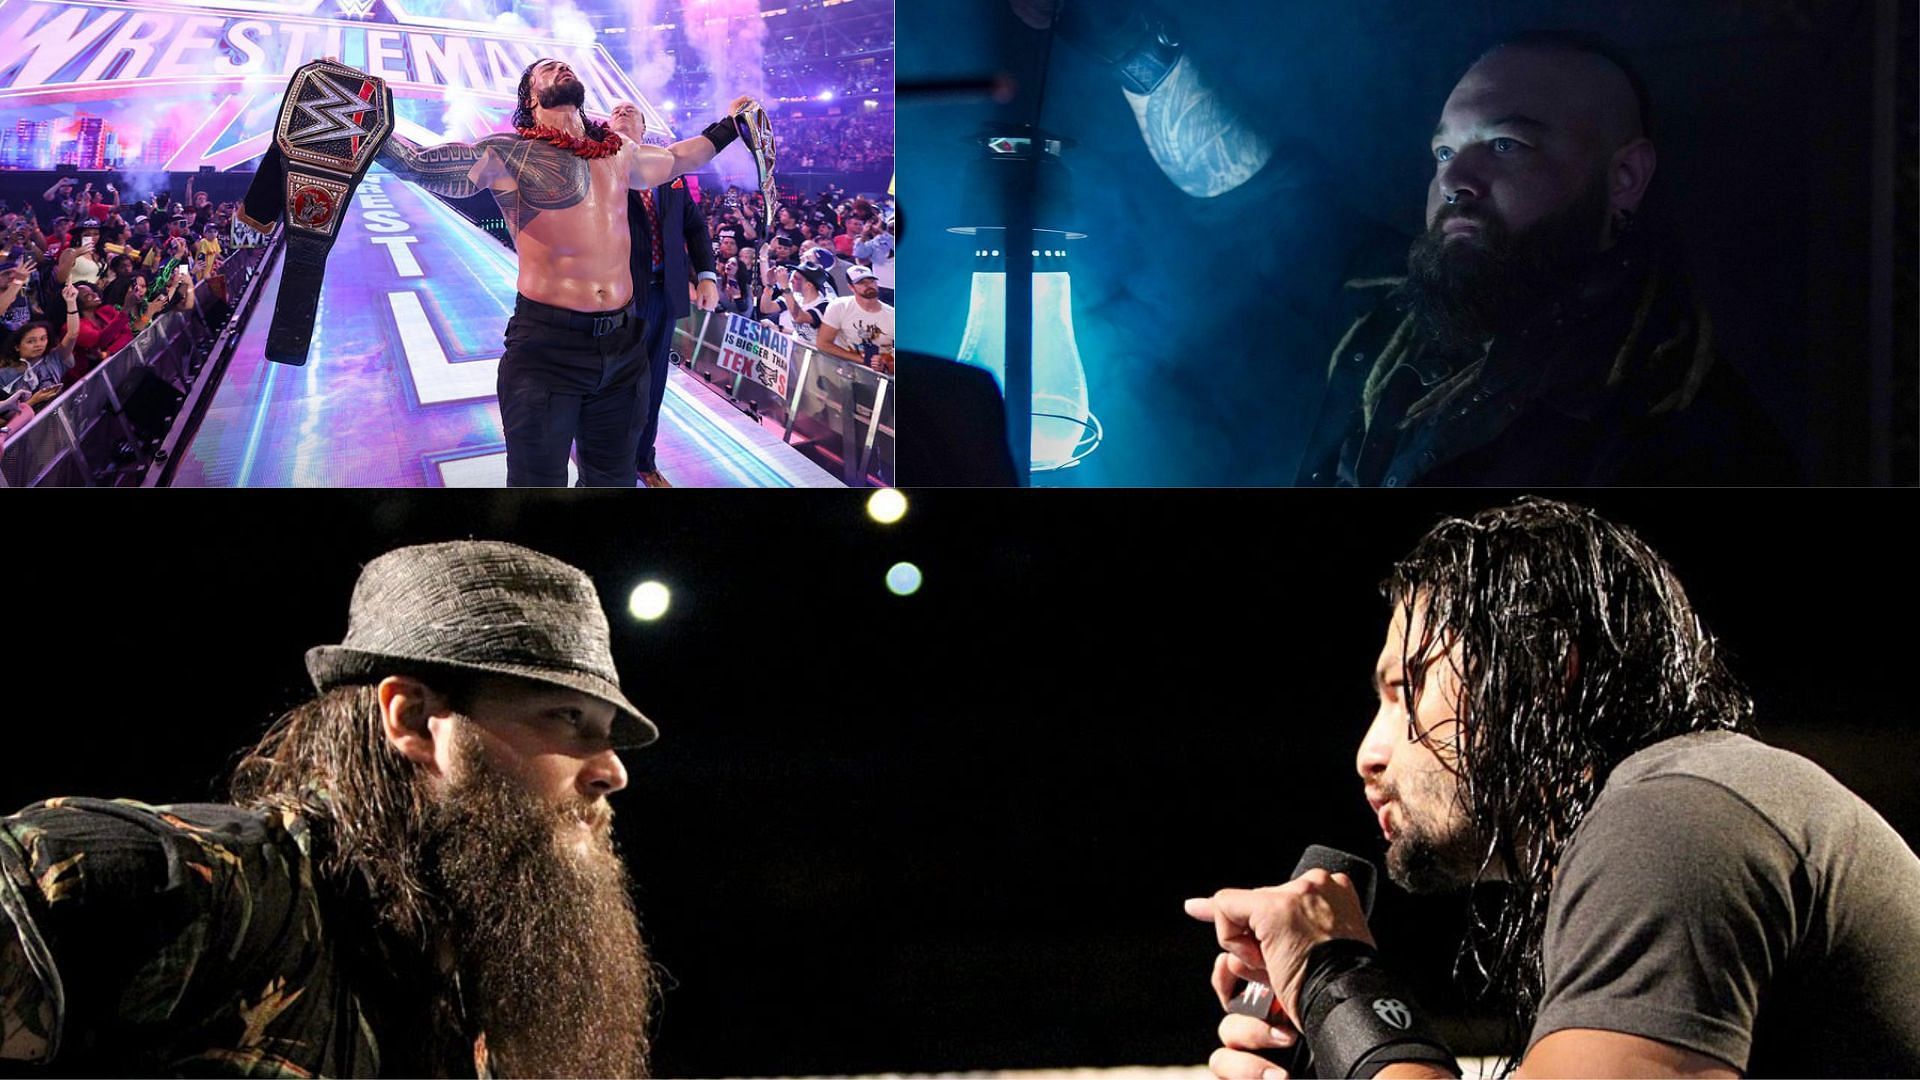 Bray Wyatt and Roman Reigns are mammoth superstars of WWE